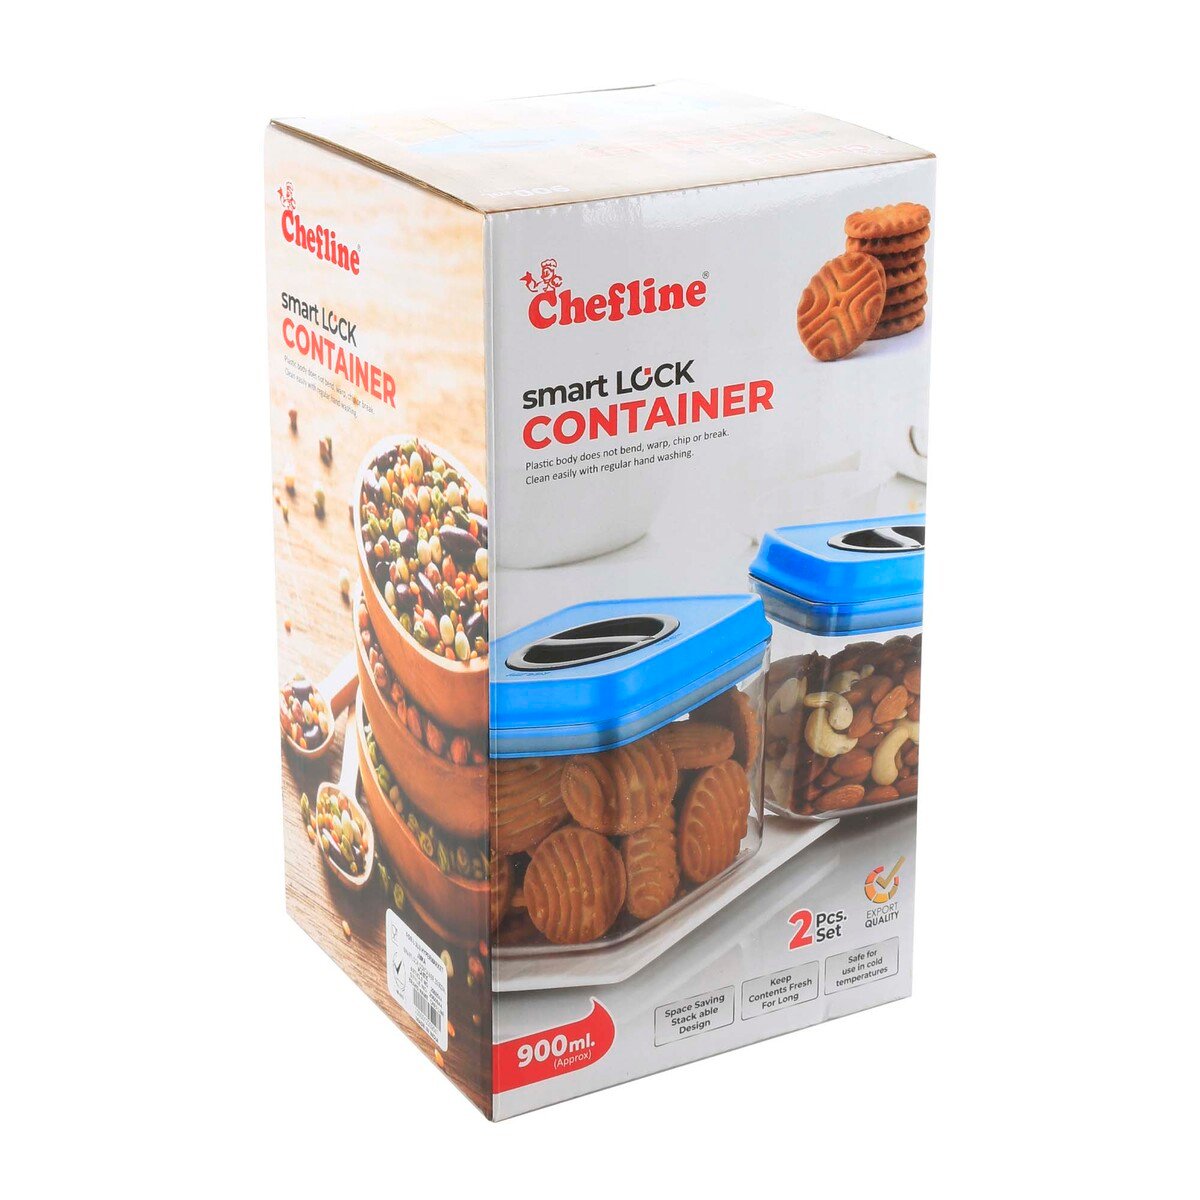 Chefline Smart Lock Container, 900 ml, 2 pcs